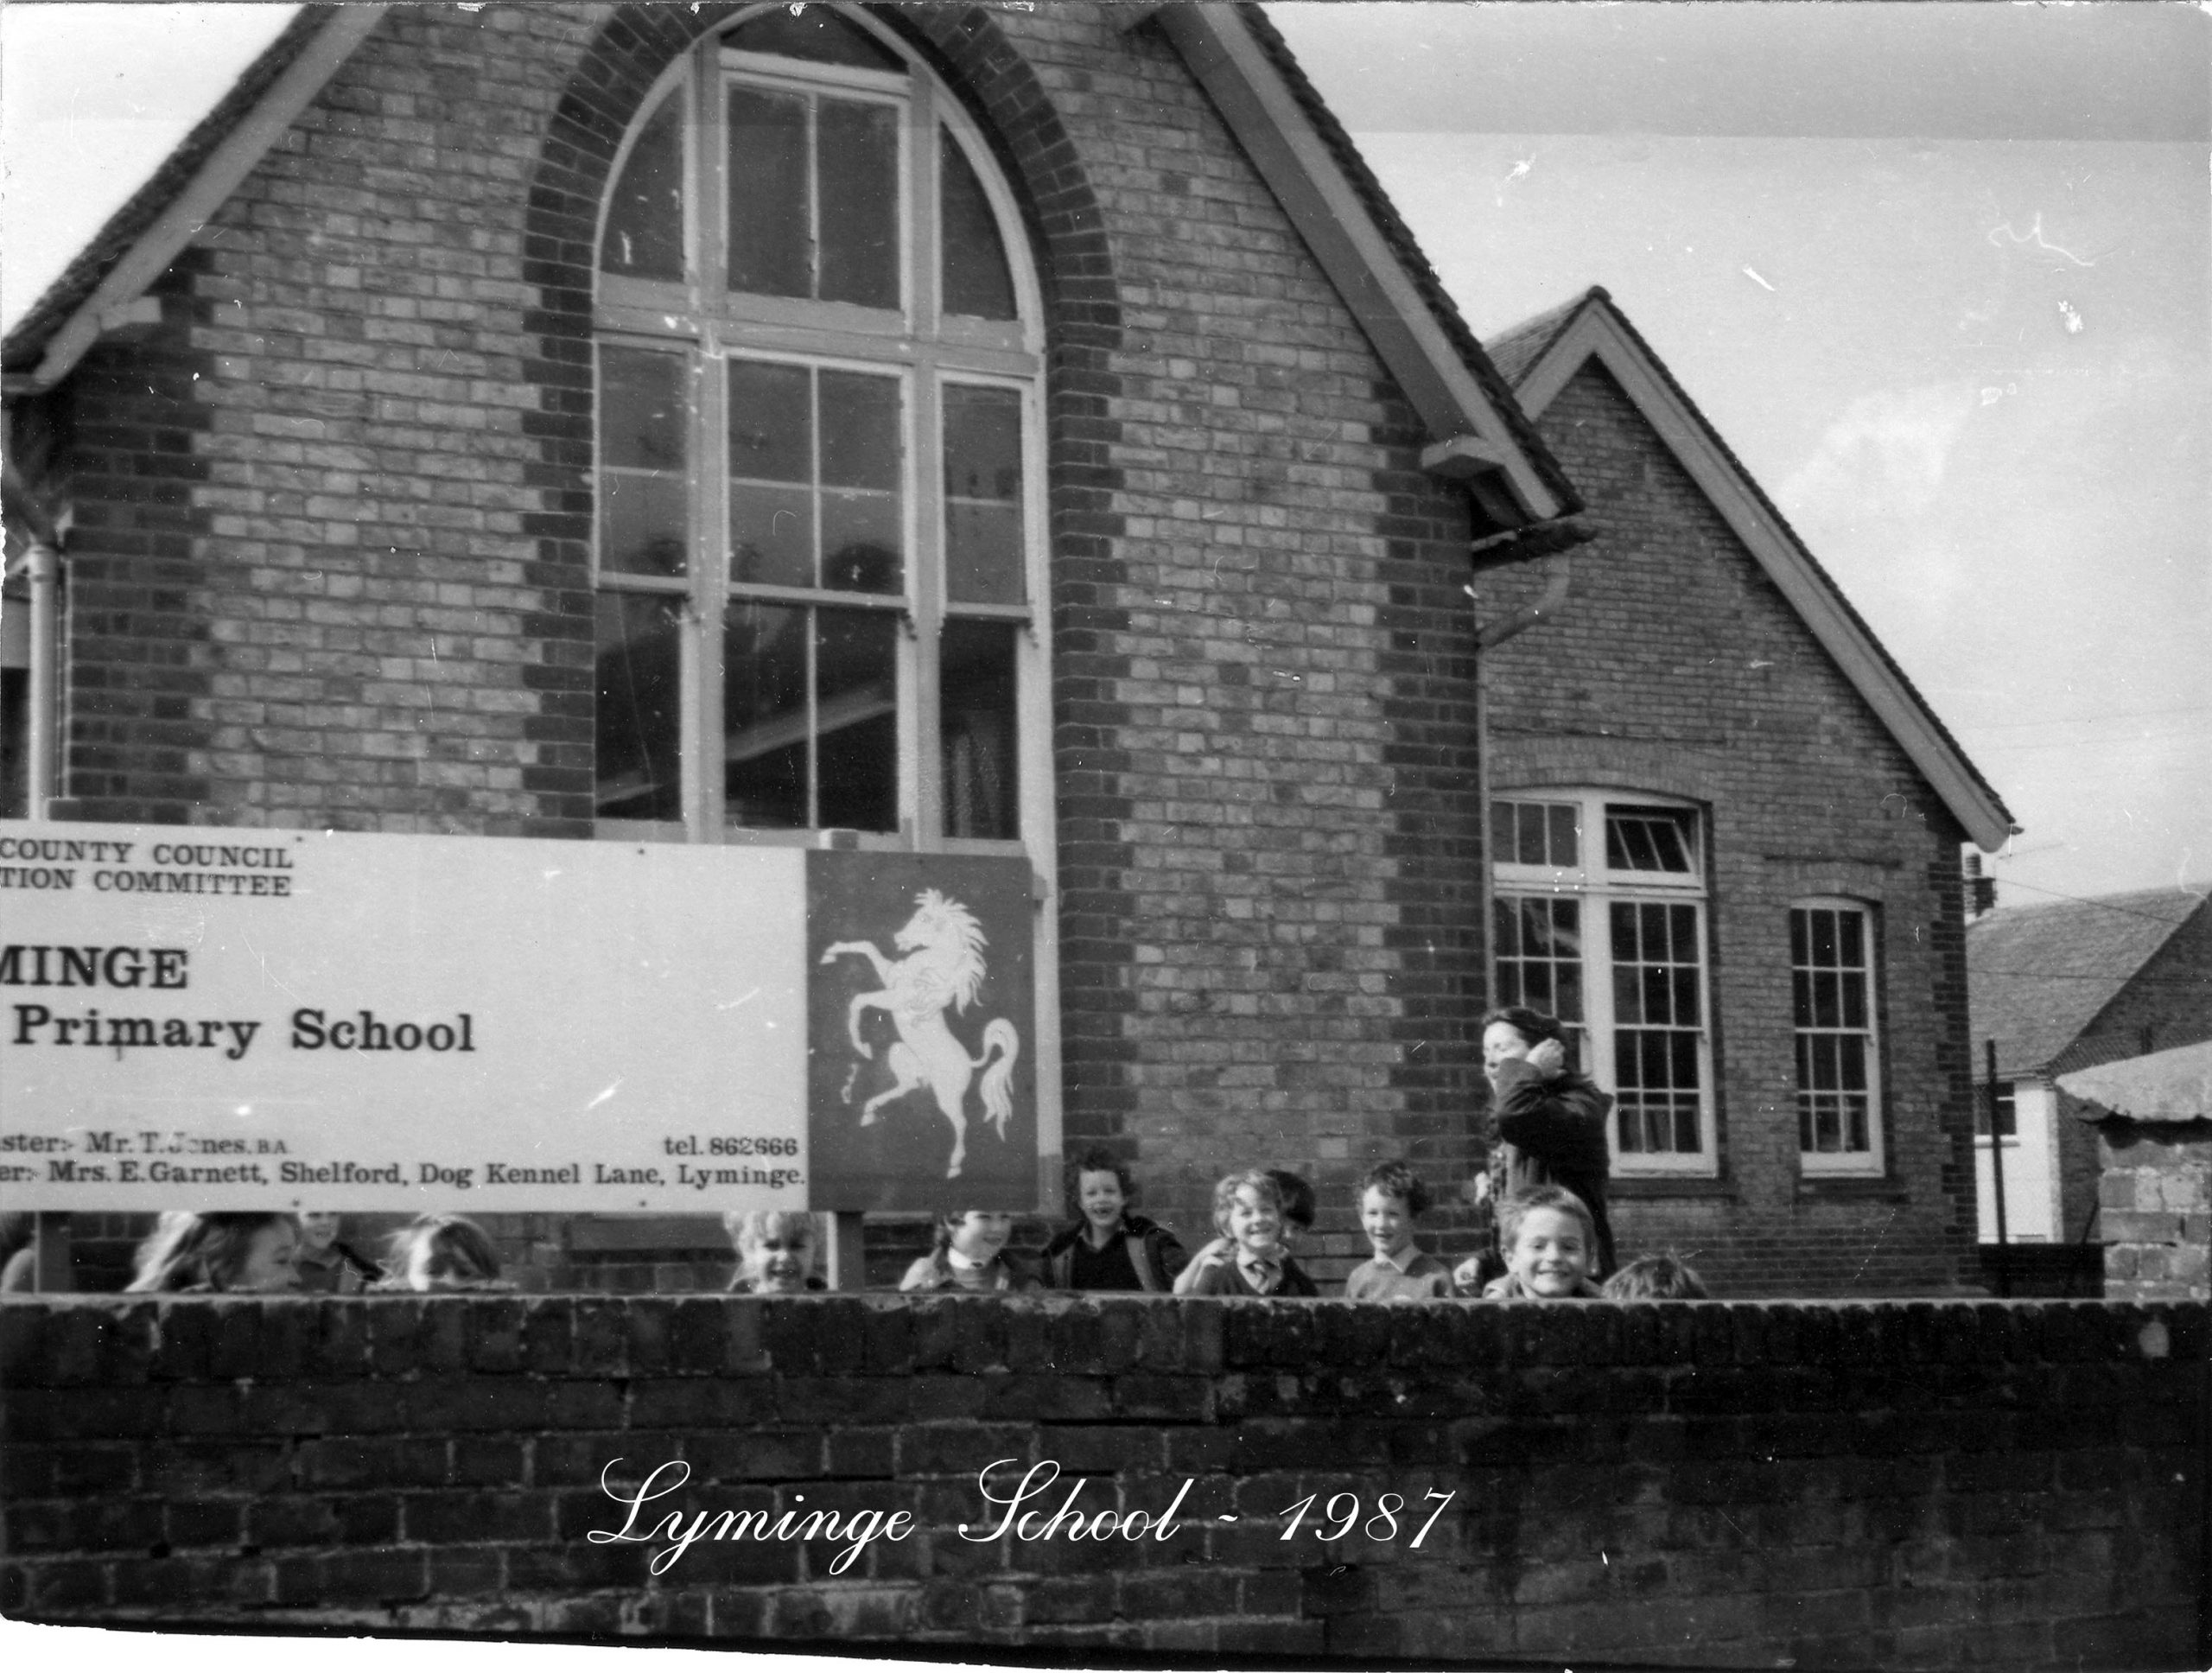 Lyminge School 1987